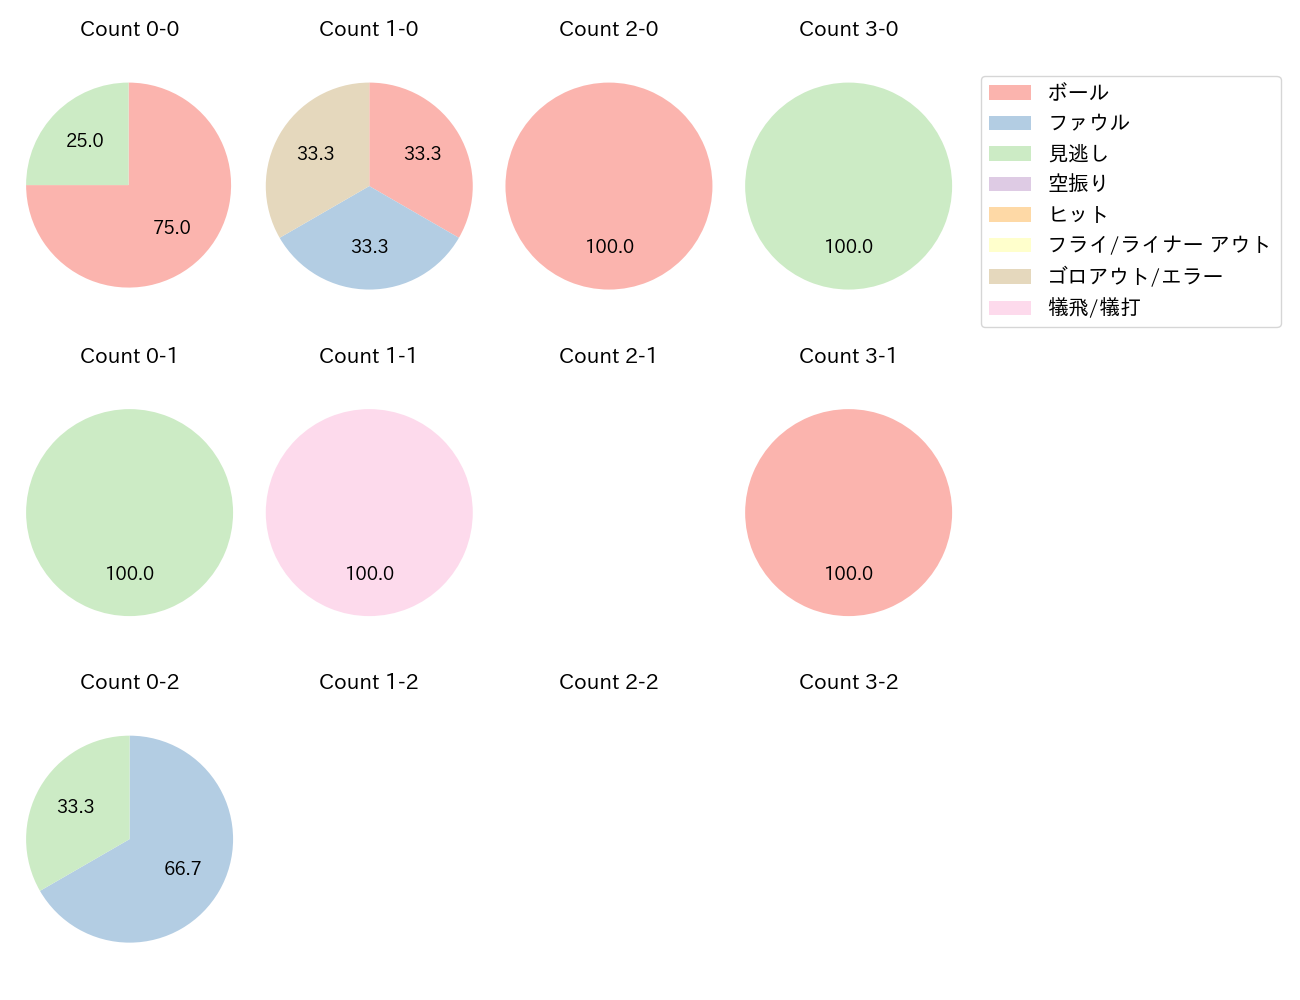 小田 裕也の球数分布(2023年7月)